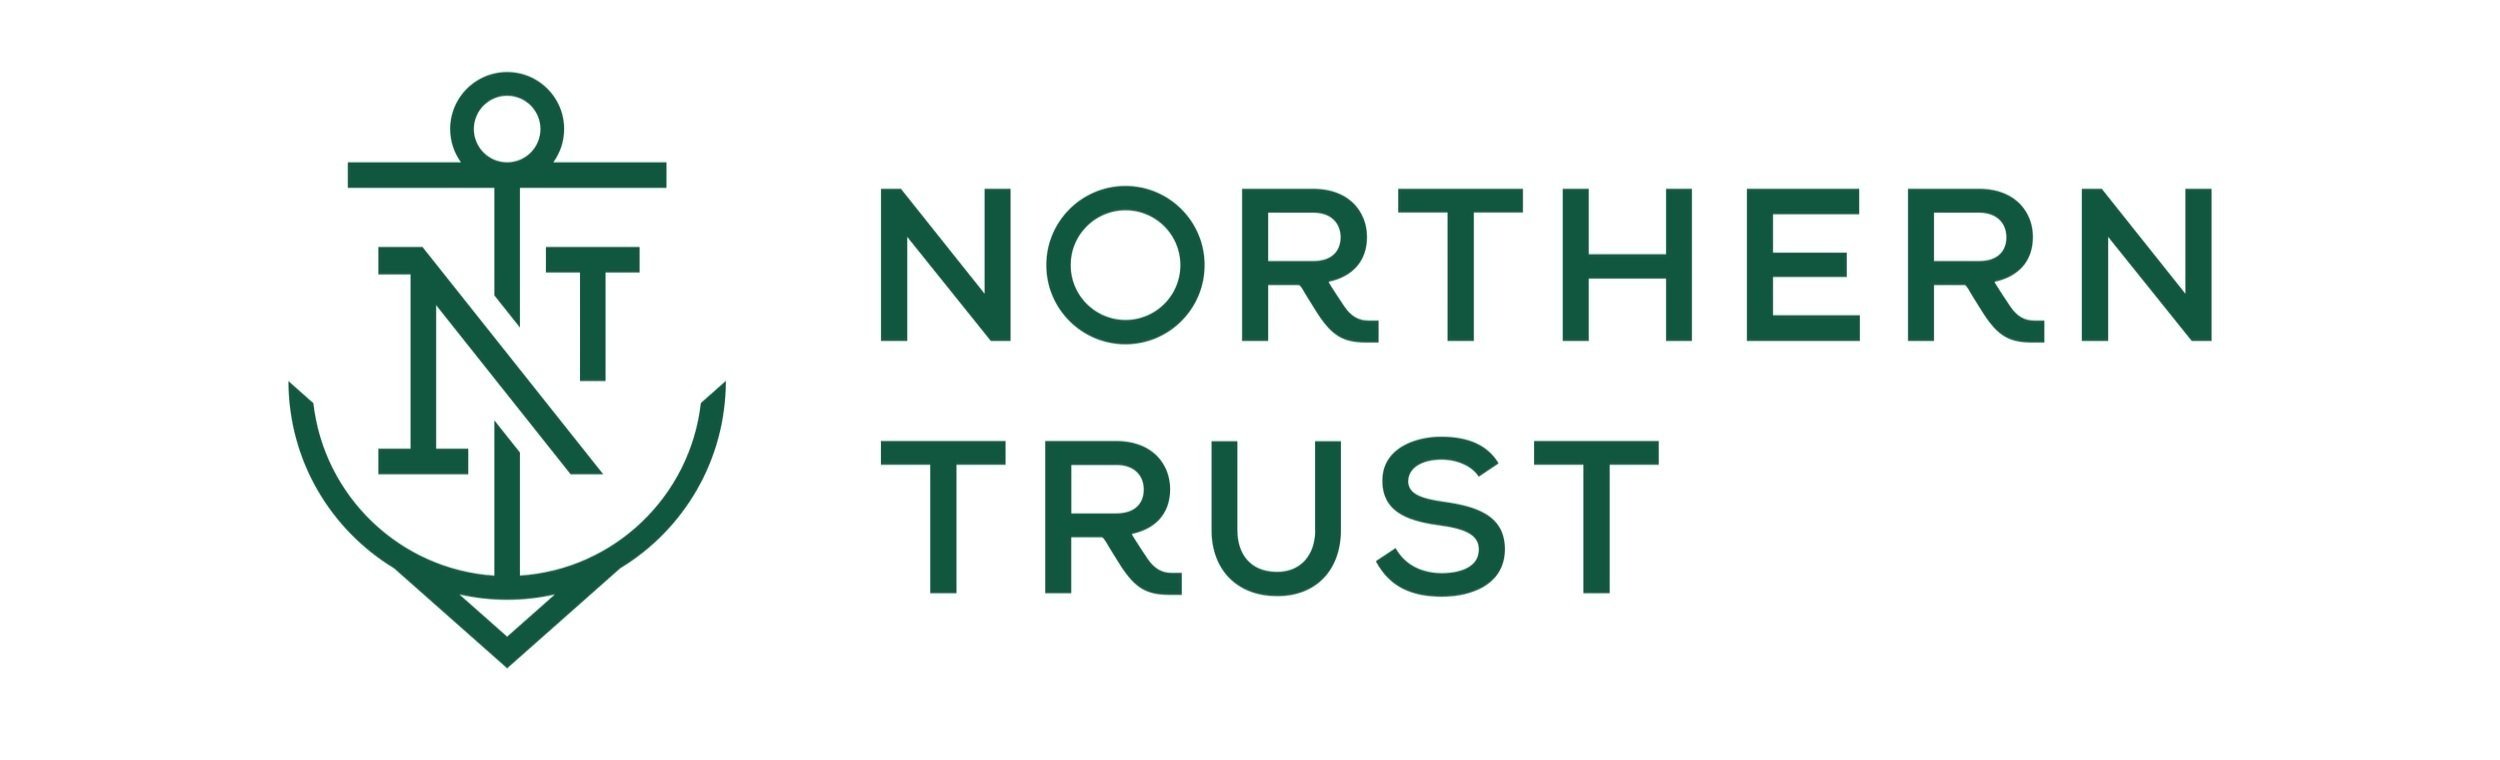 Northern_Trust-Logo.jpg